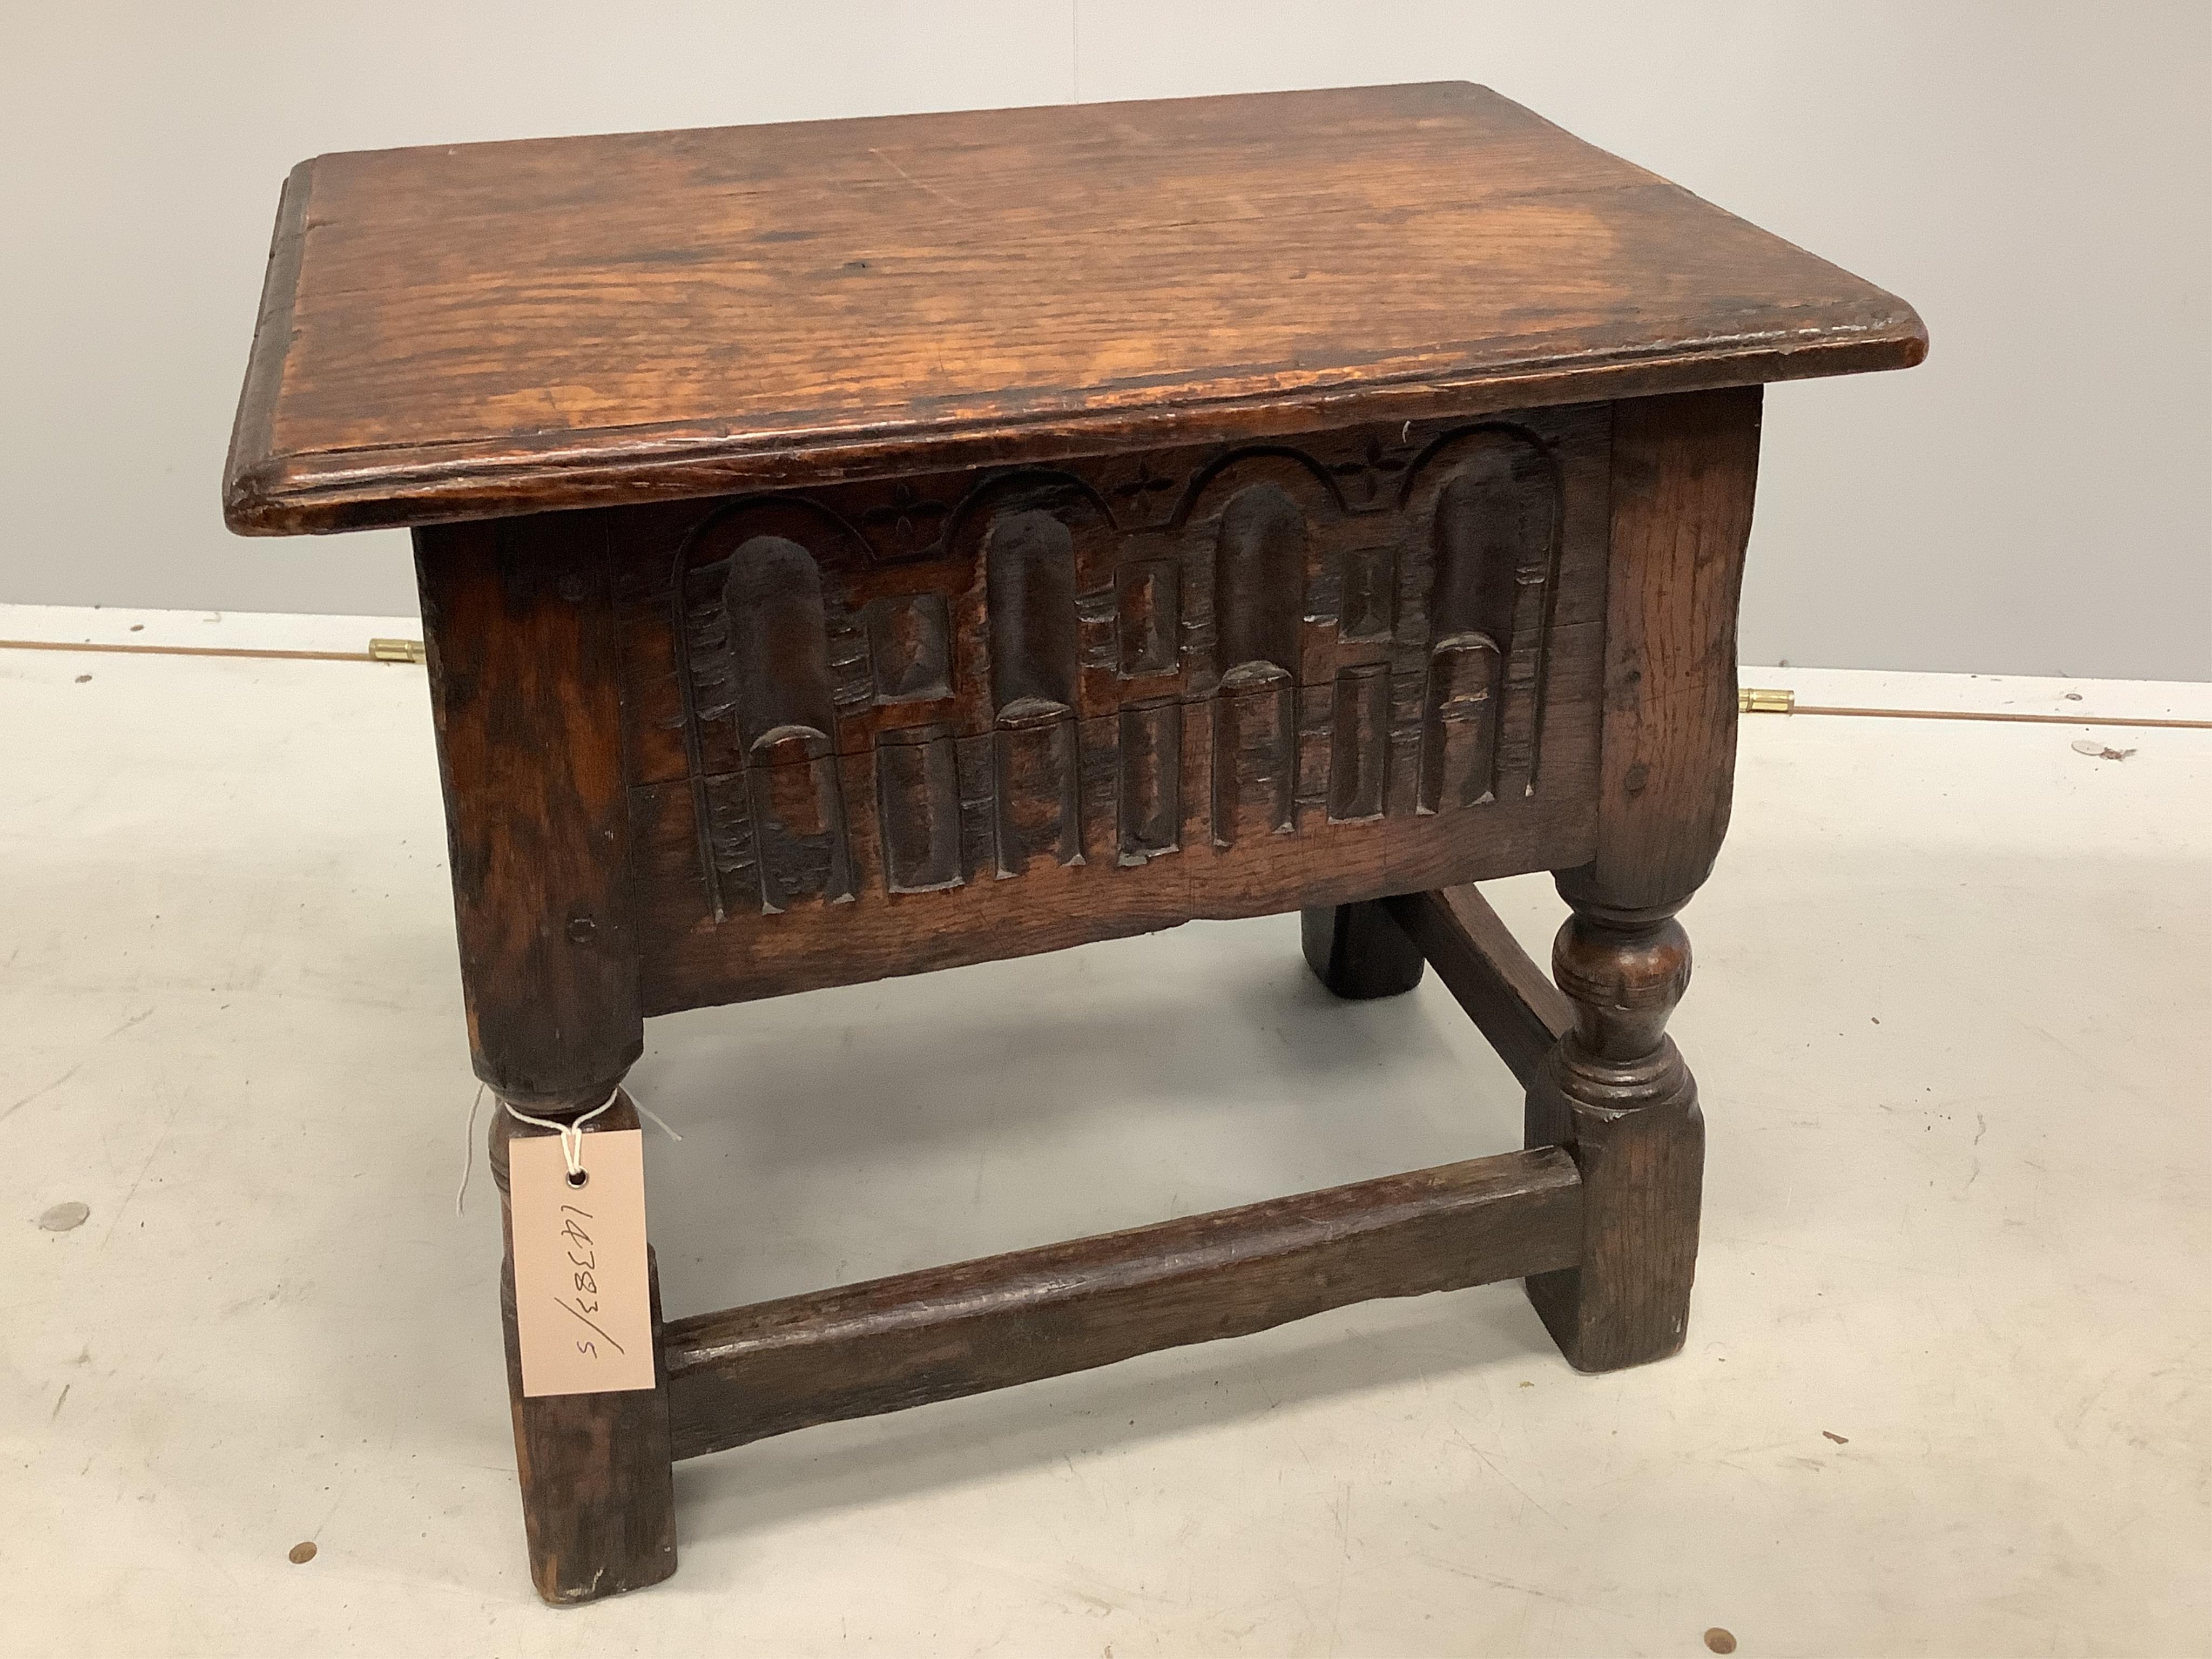 A 17th century style oak box seat joint stool, width 40cm, depth 28cm, height 37cm